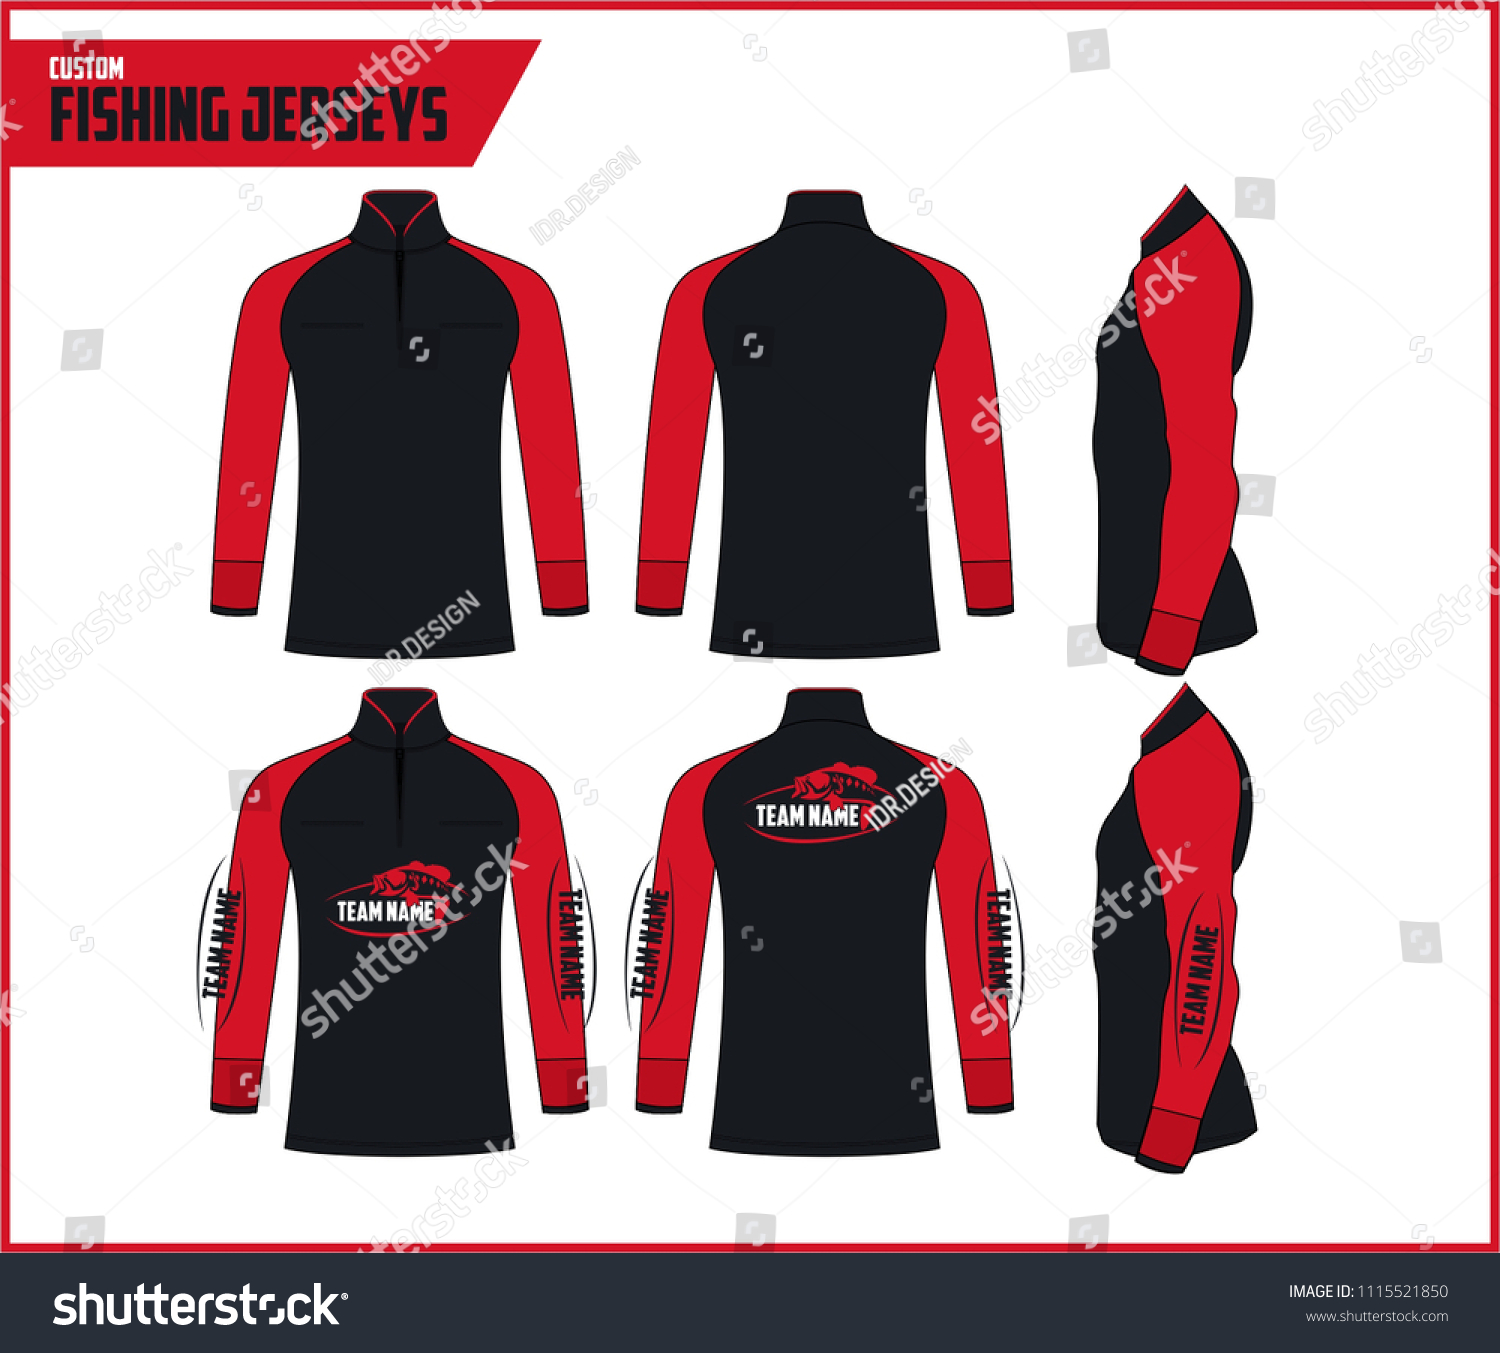 design custom fishing jerseys